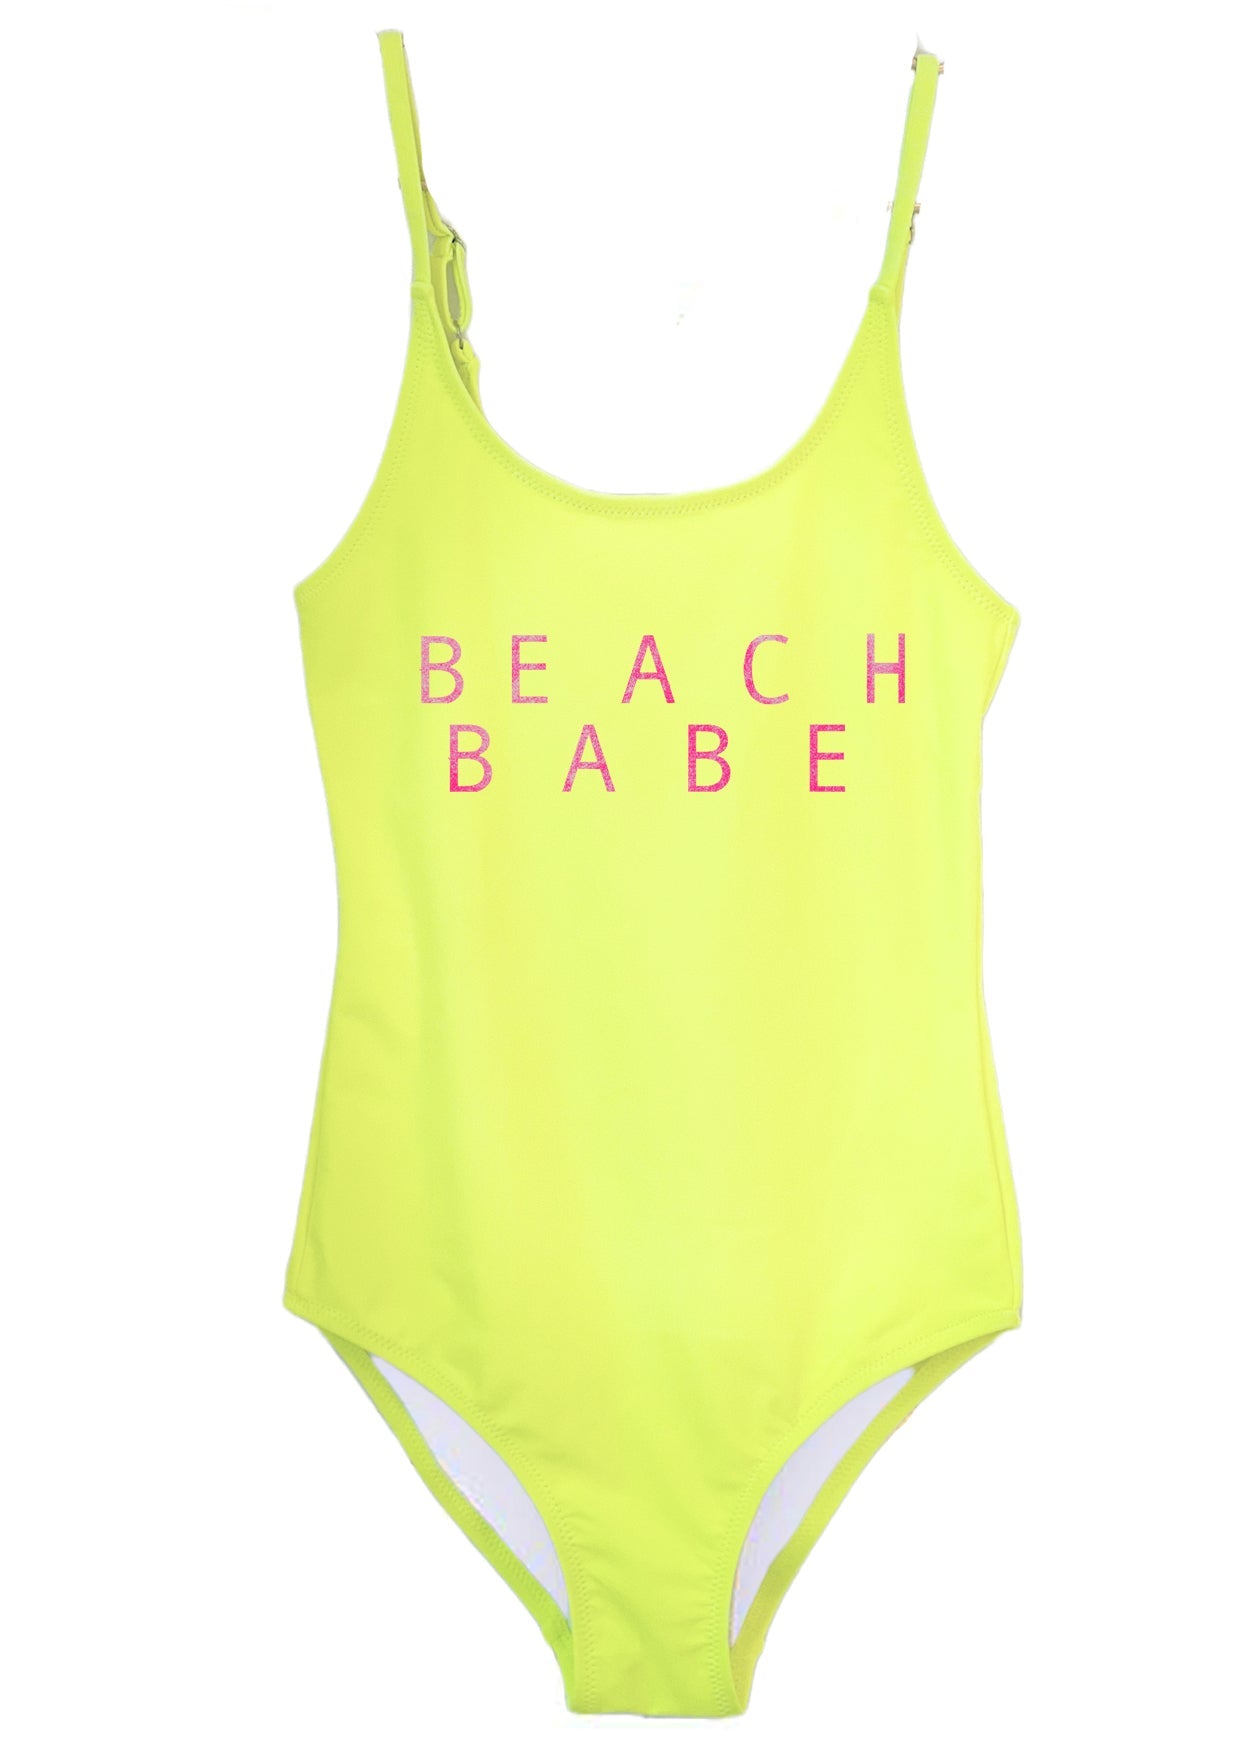 Beach Babe Neon Yellow Swimsuit